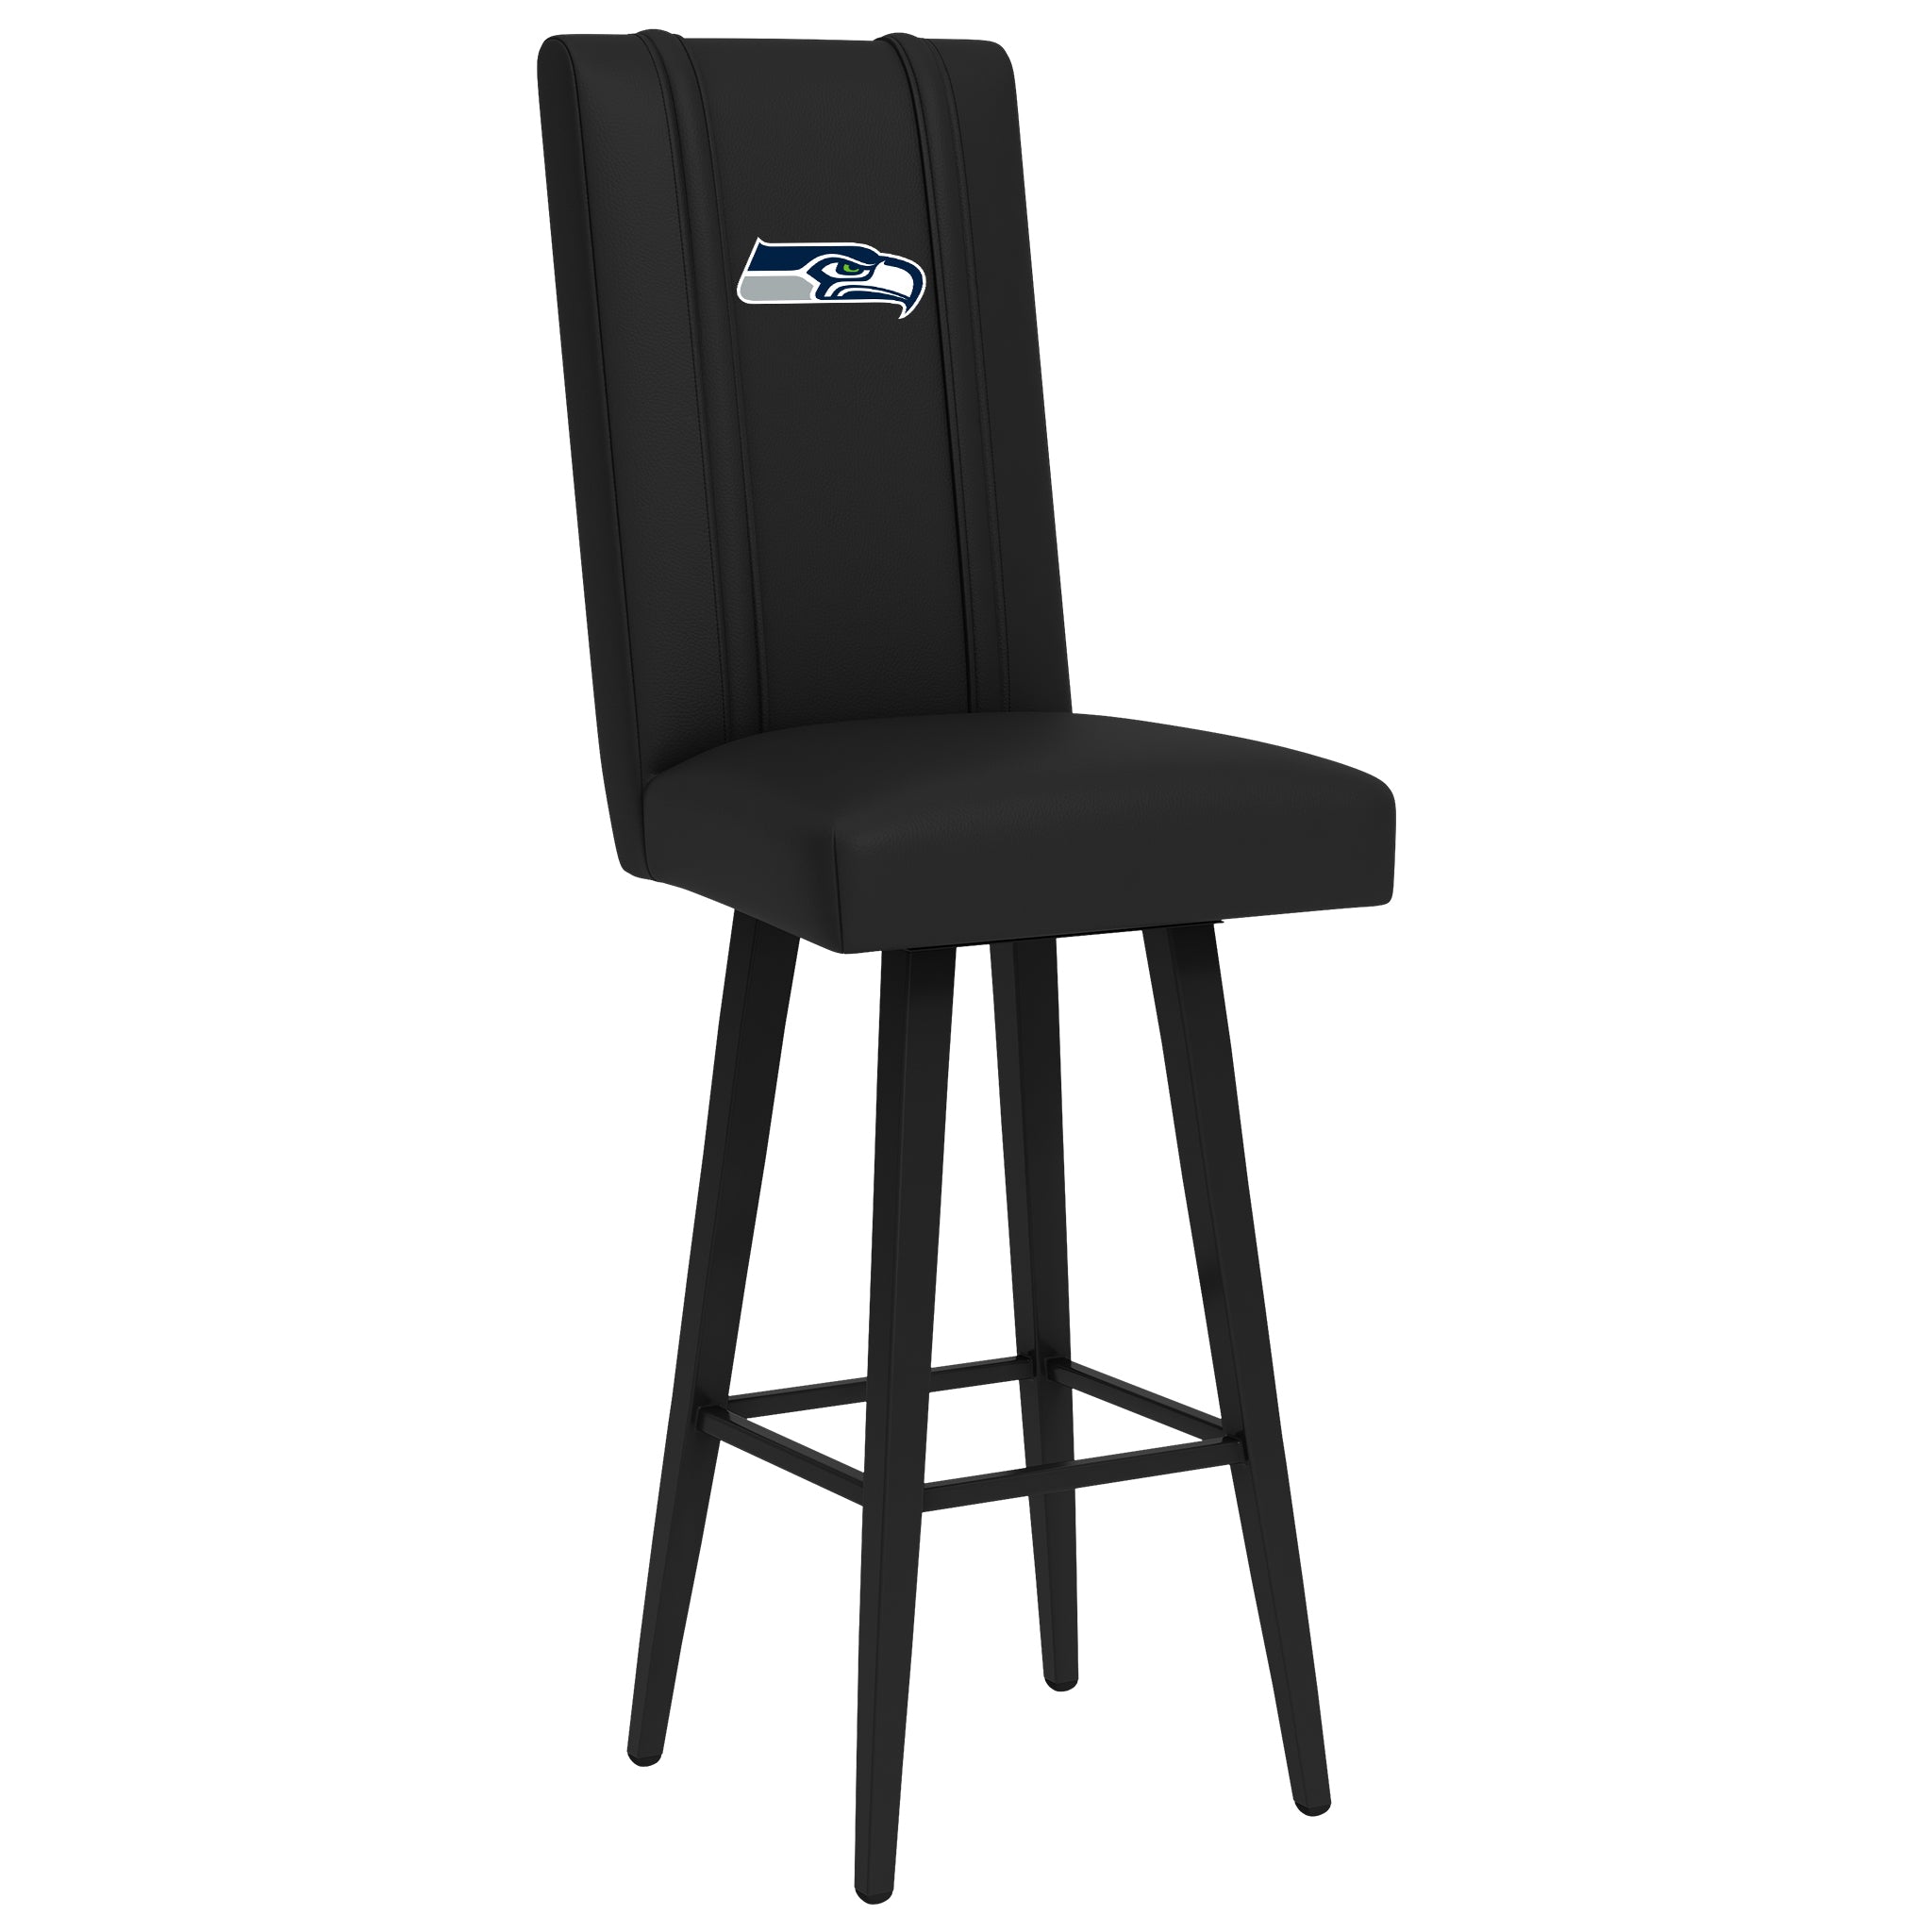 Seattle Seahawks Swivel Bar Stool - Chair - Furniture - Kitchen